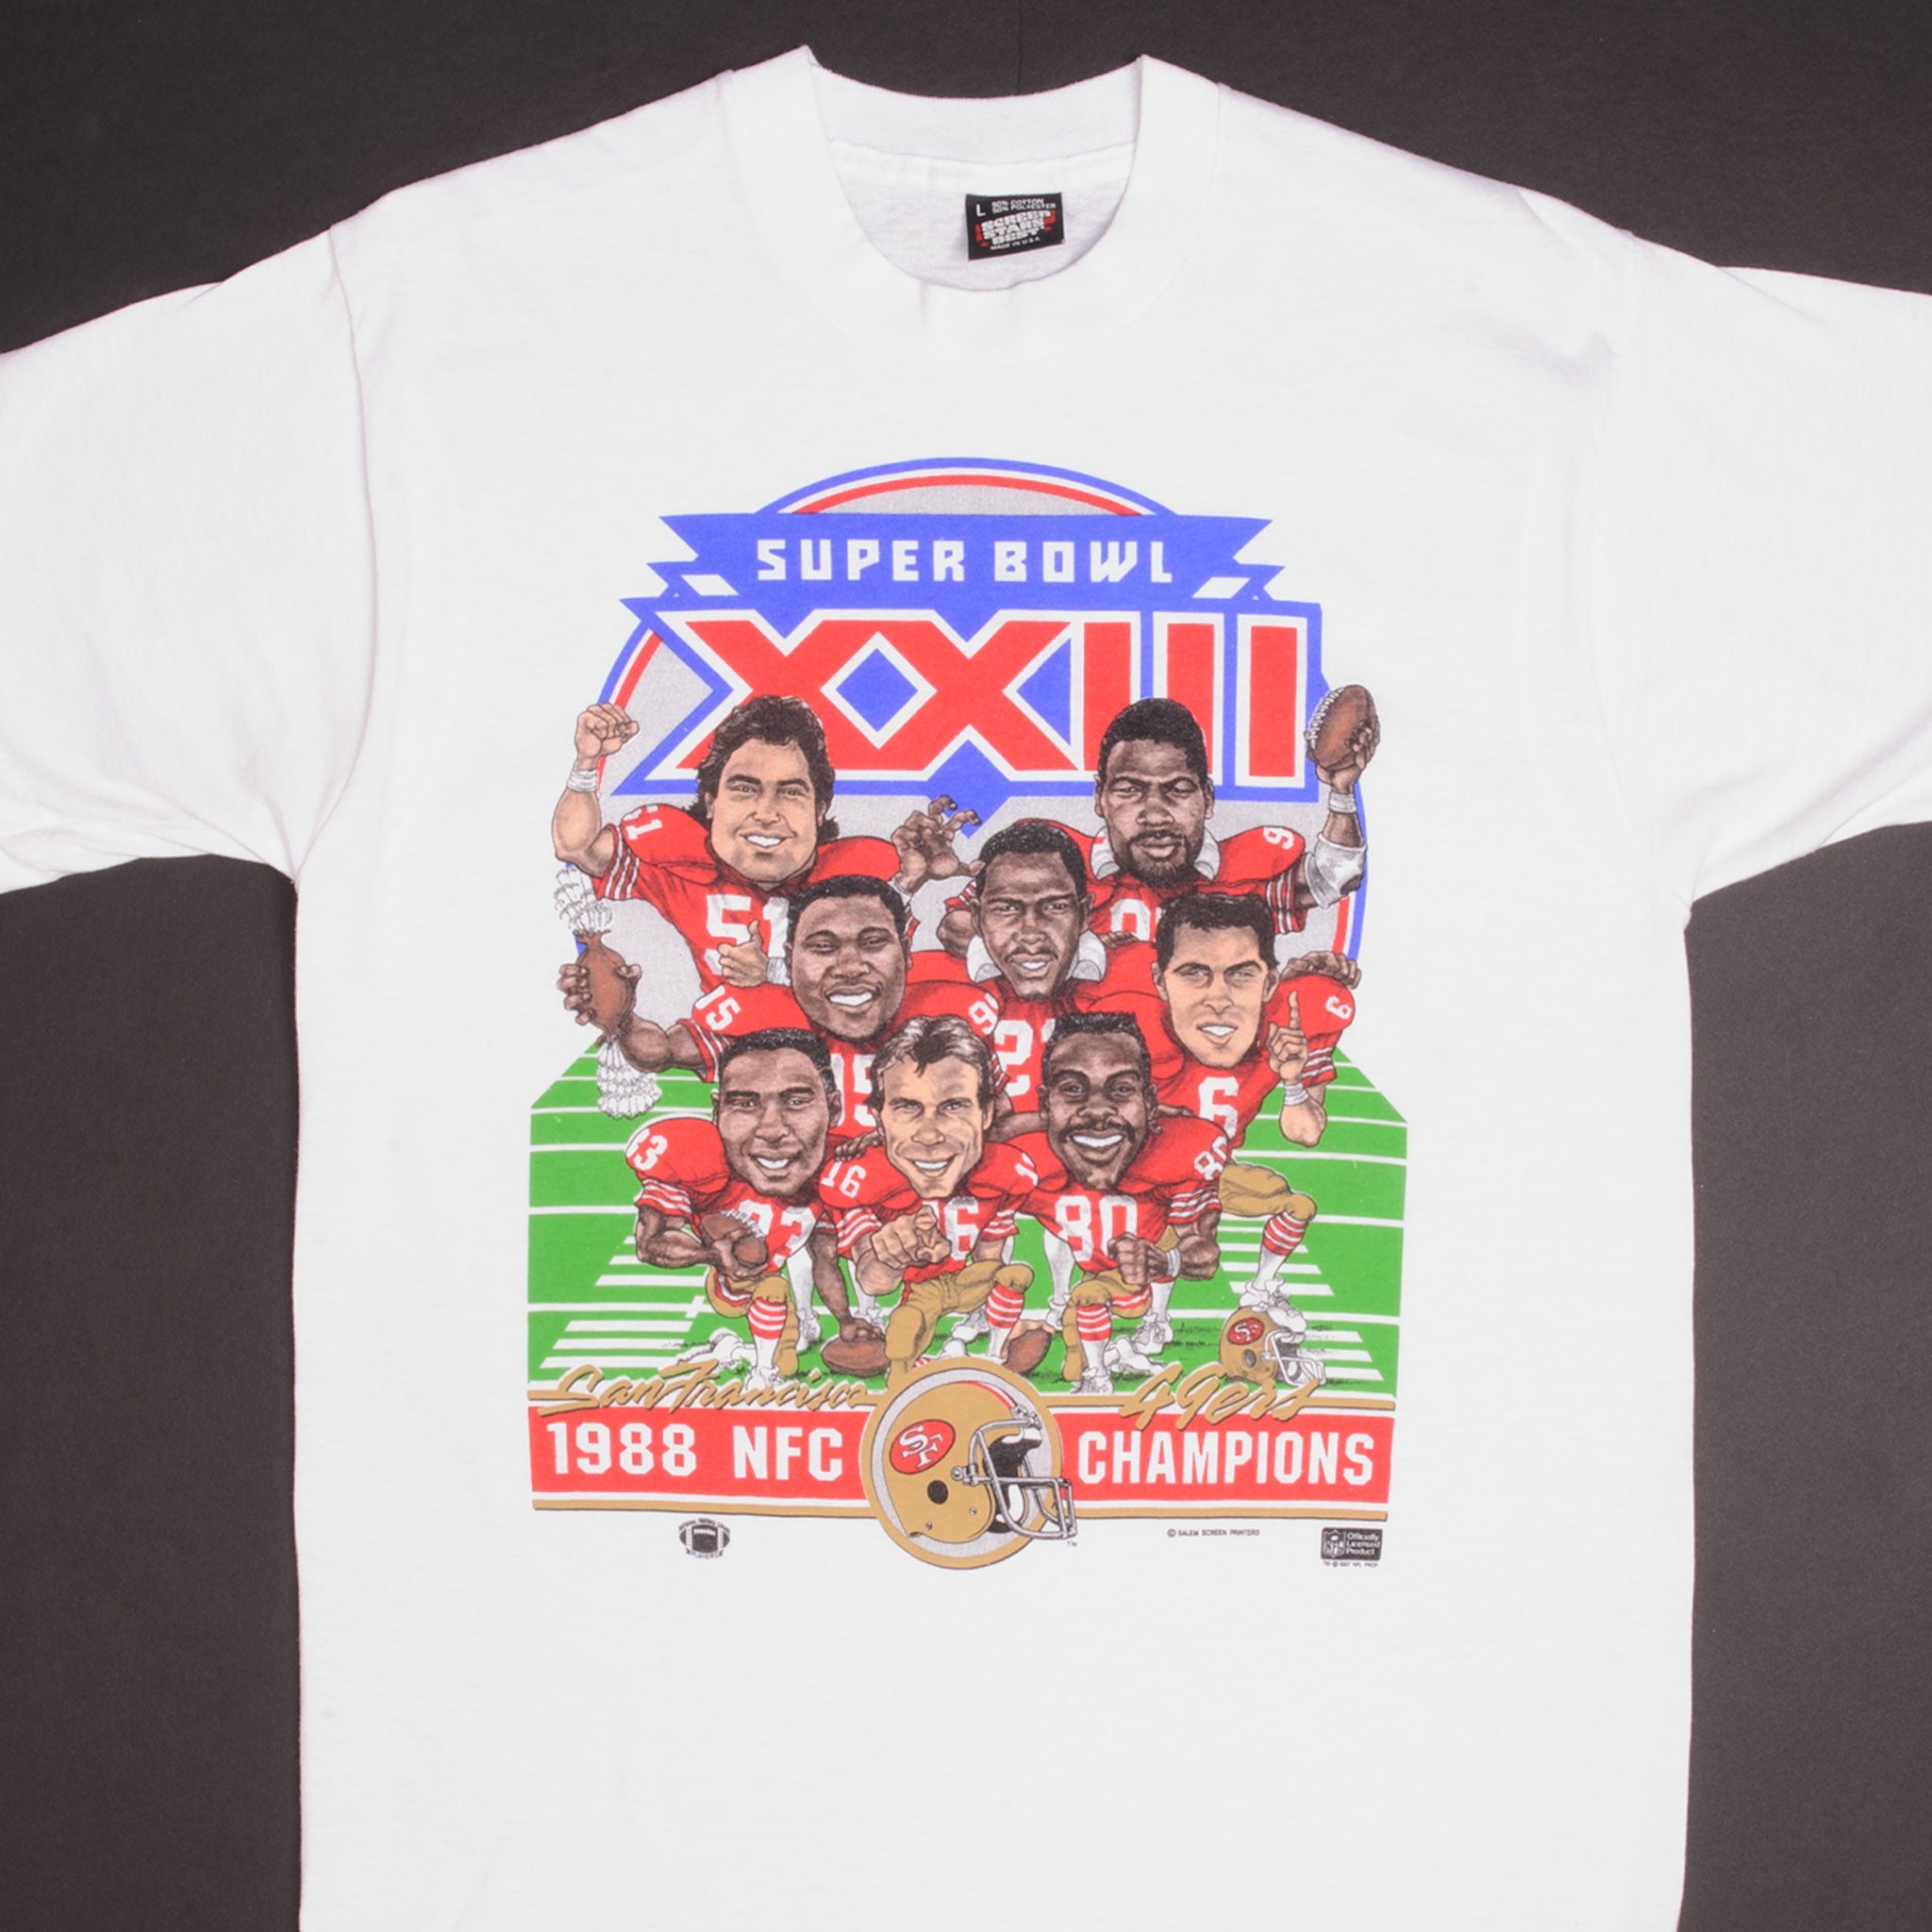 49ers championship shirt